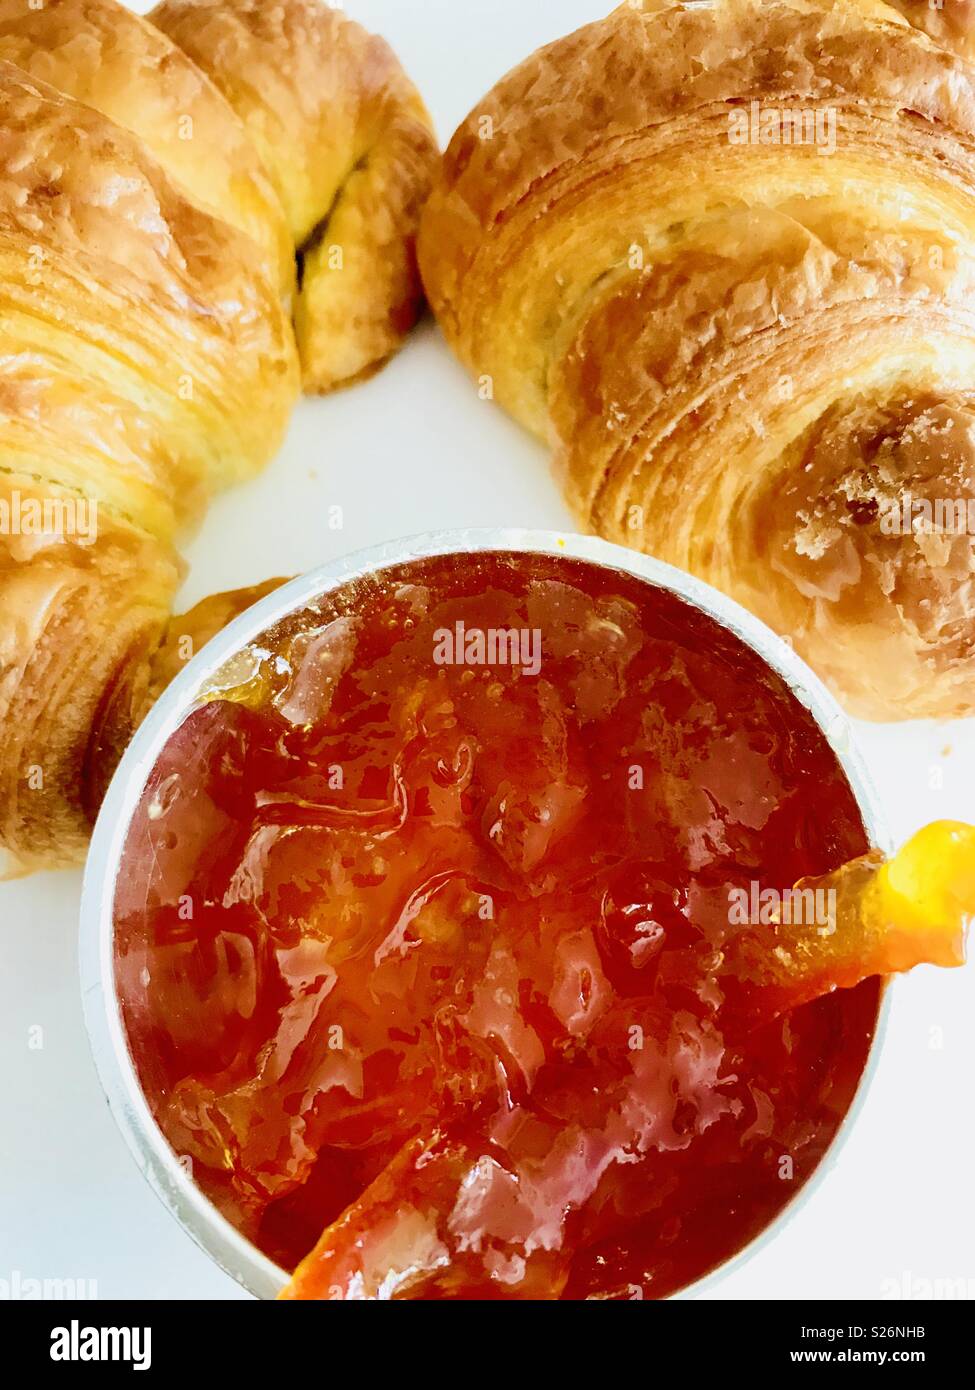 Breakfast croissants with marmalade Stock Photo - Alamy